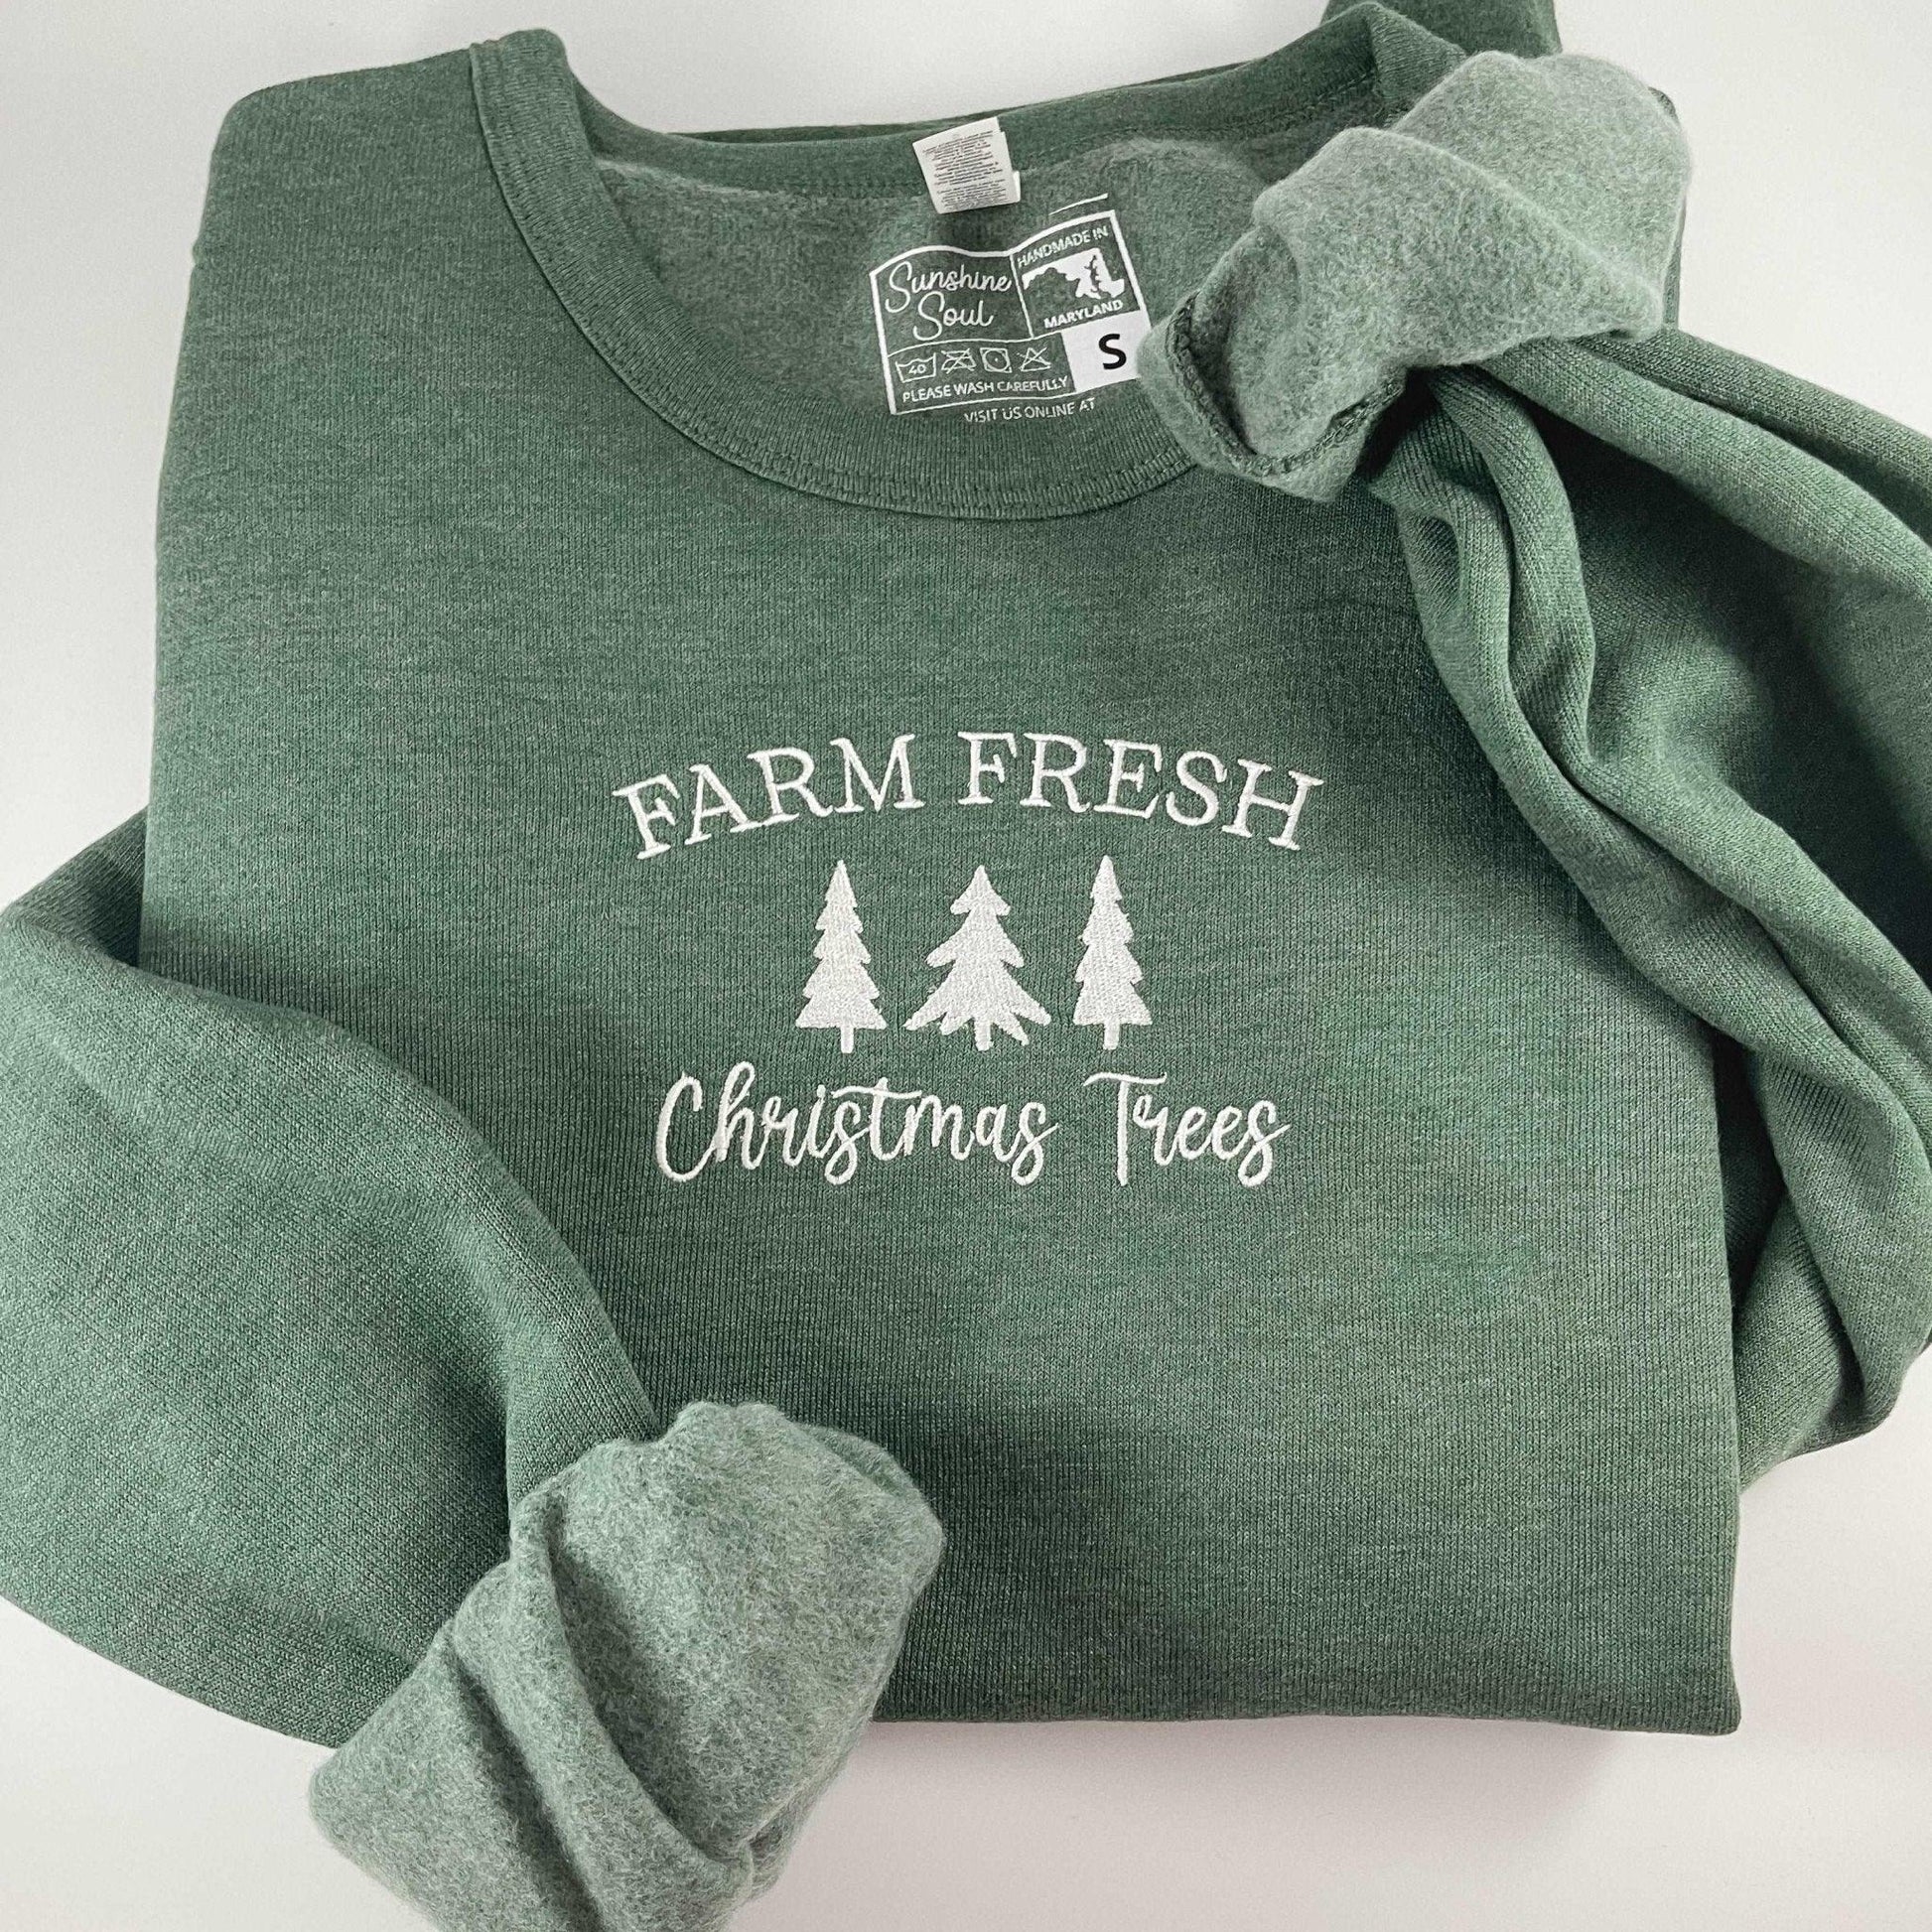 Farm Fresh Christmas Trees Embroidered Crewneck - Sunshine Soul MD